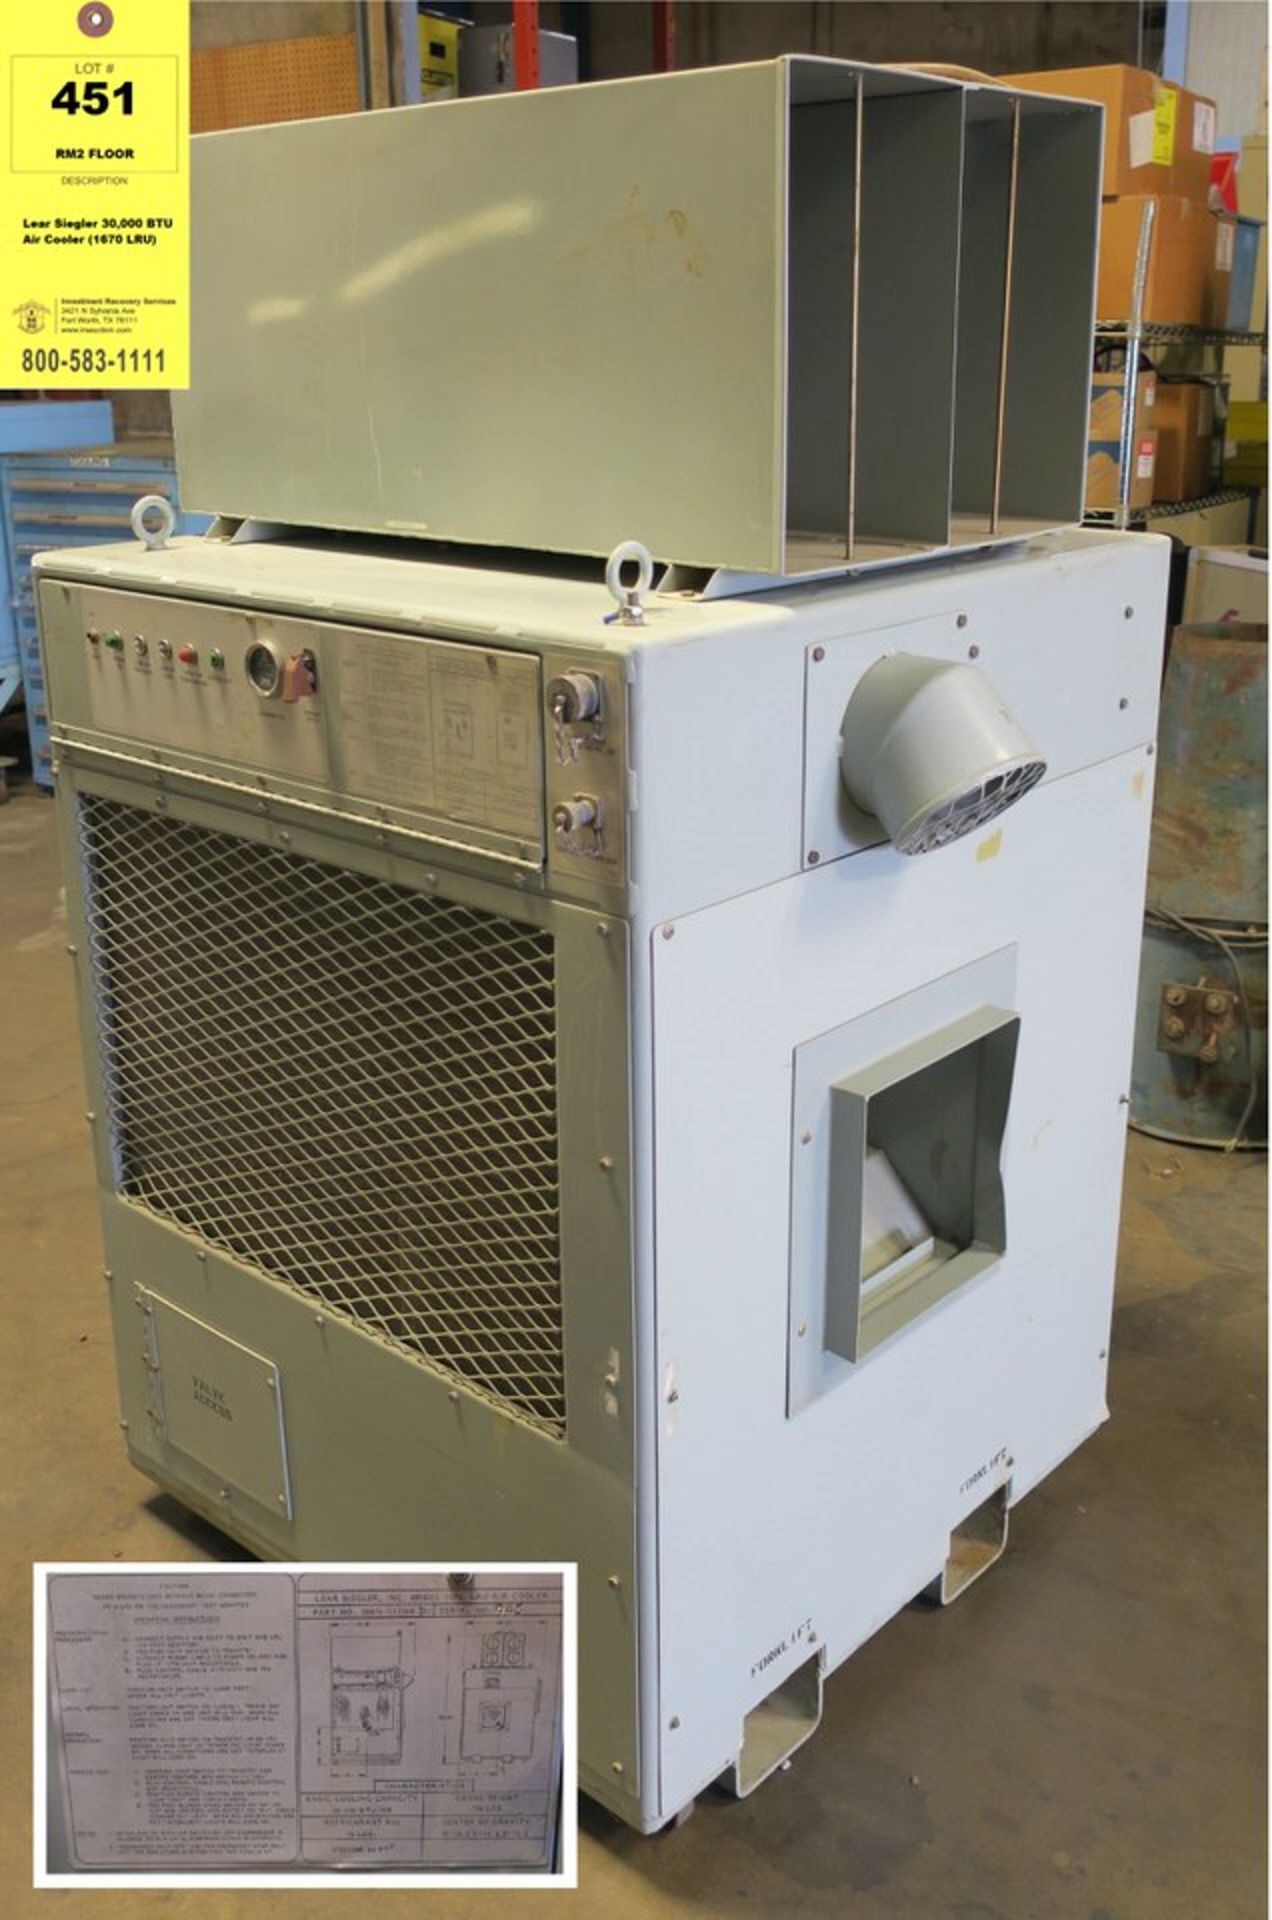 Lear Siegler 30,000 BTU Air Cooler (1670 LRU) - Image 2 of 2